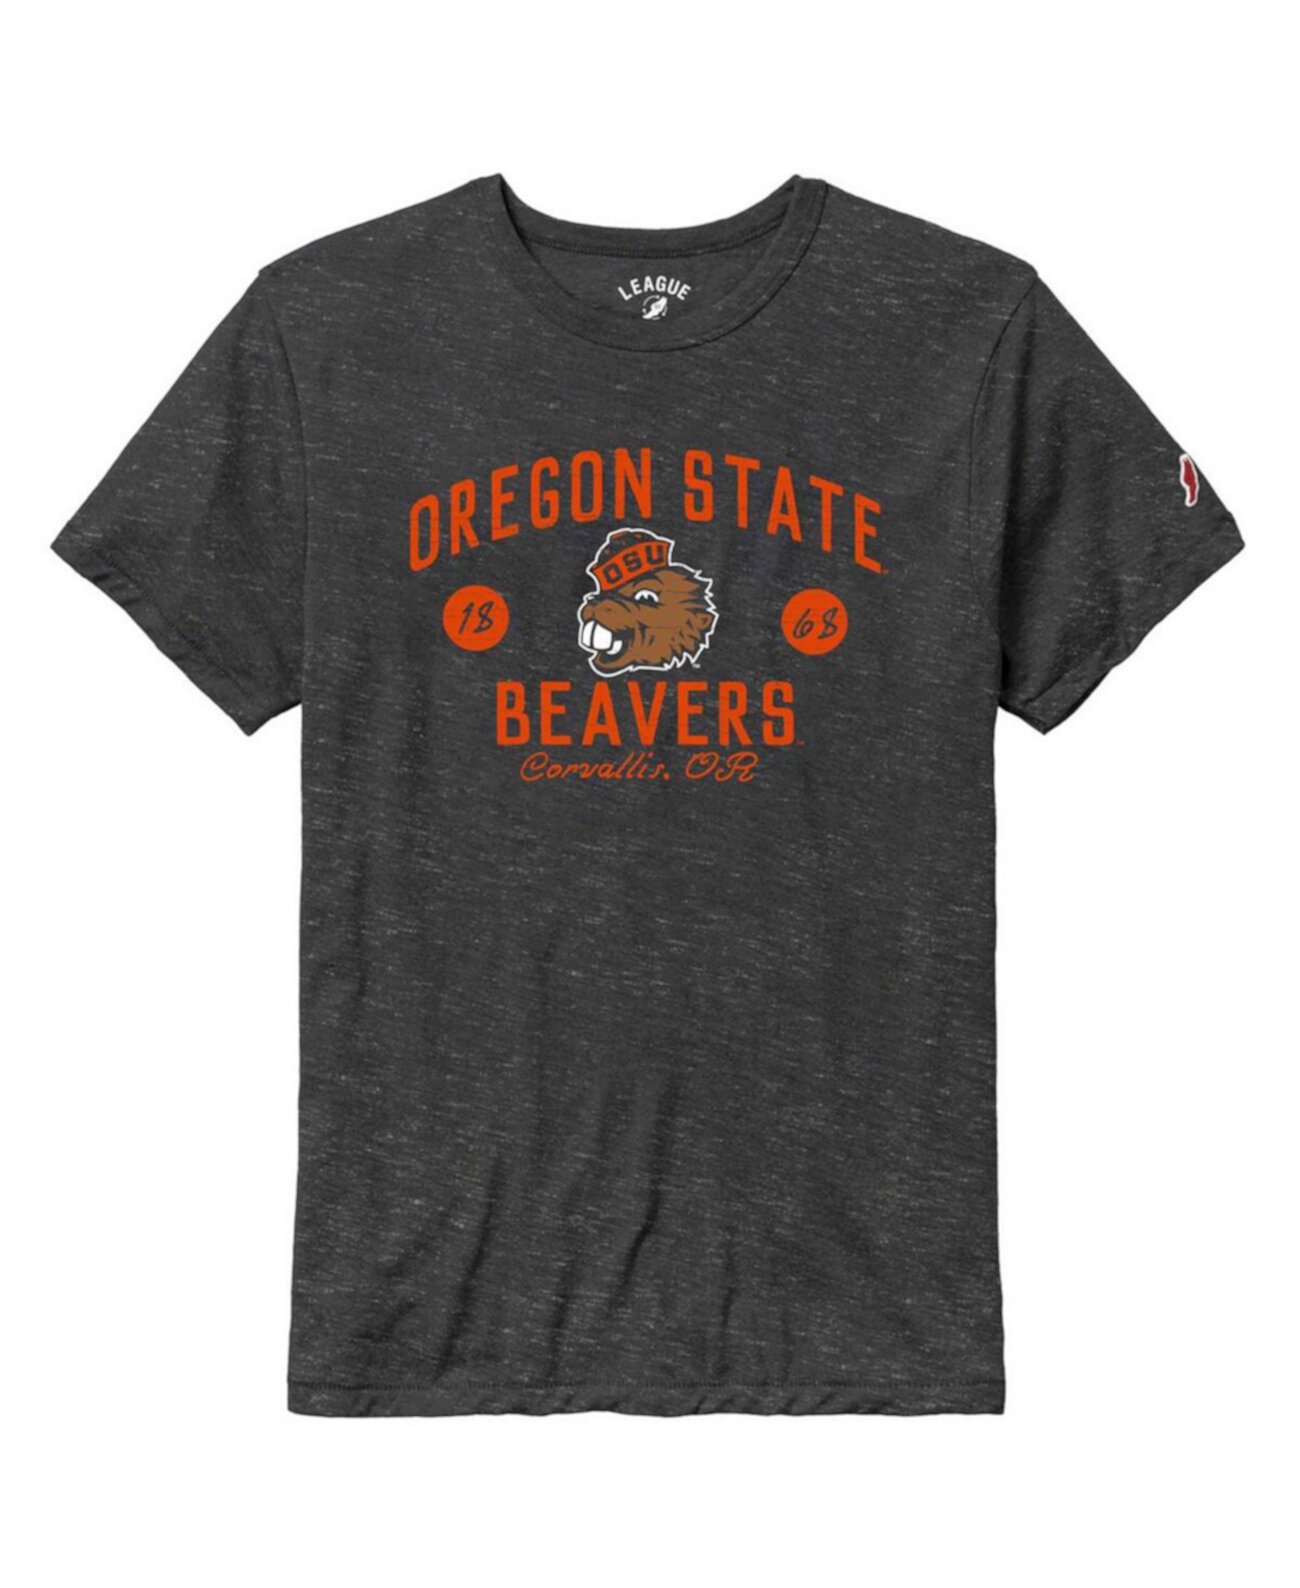 Мужская футболка цвета древесного угля с эффектом потертости Oregon State Beavers Bendy Arch Victory Falls Tri-Blend League Collegiate Wear